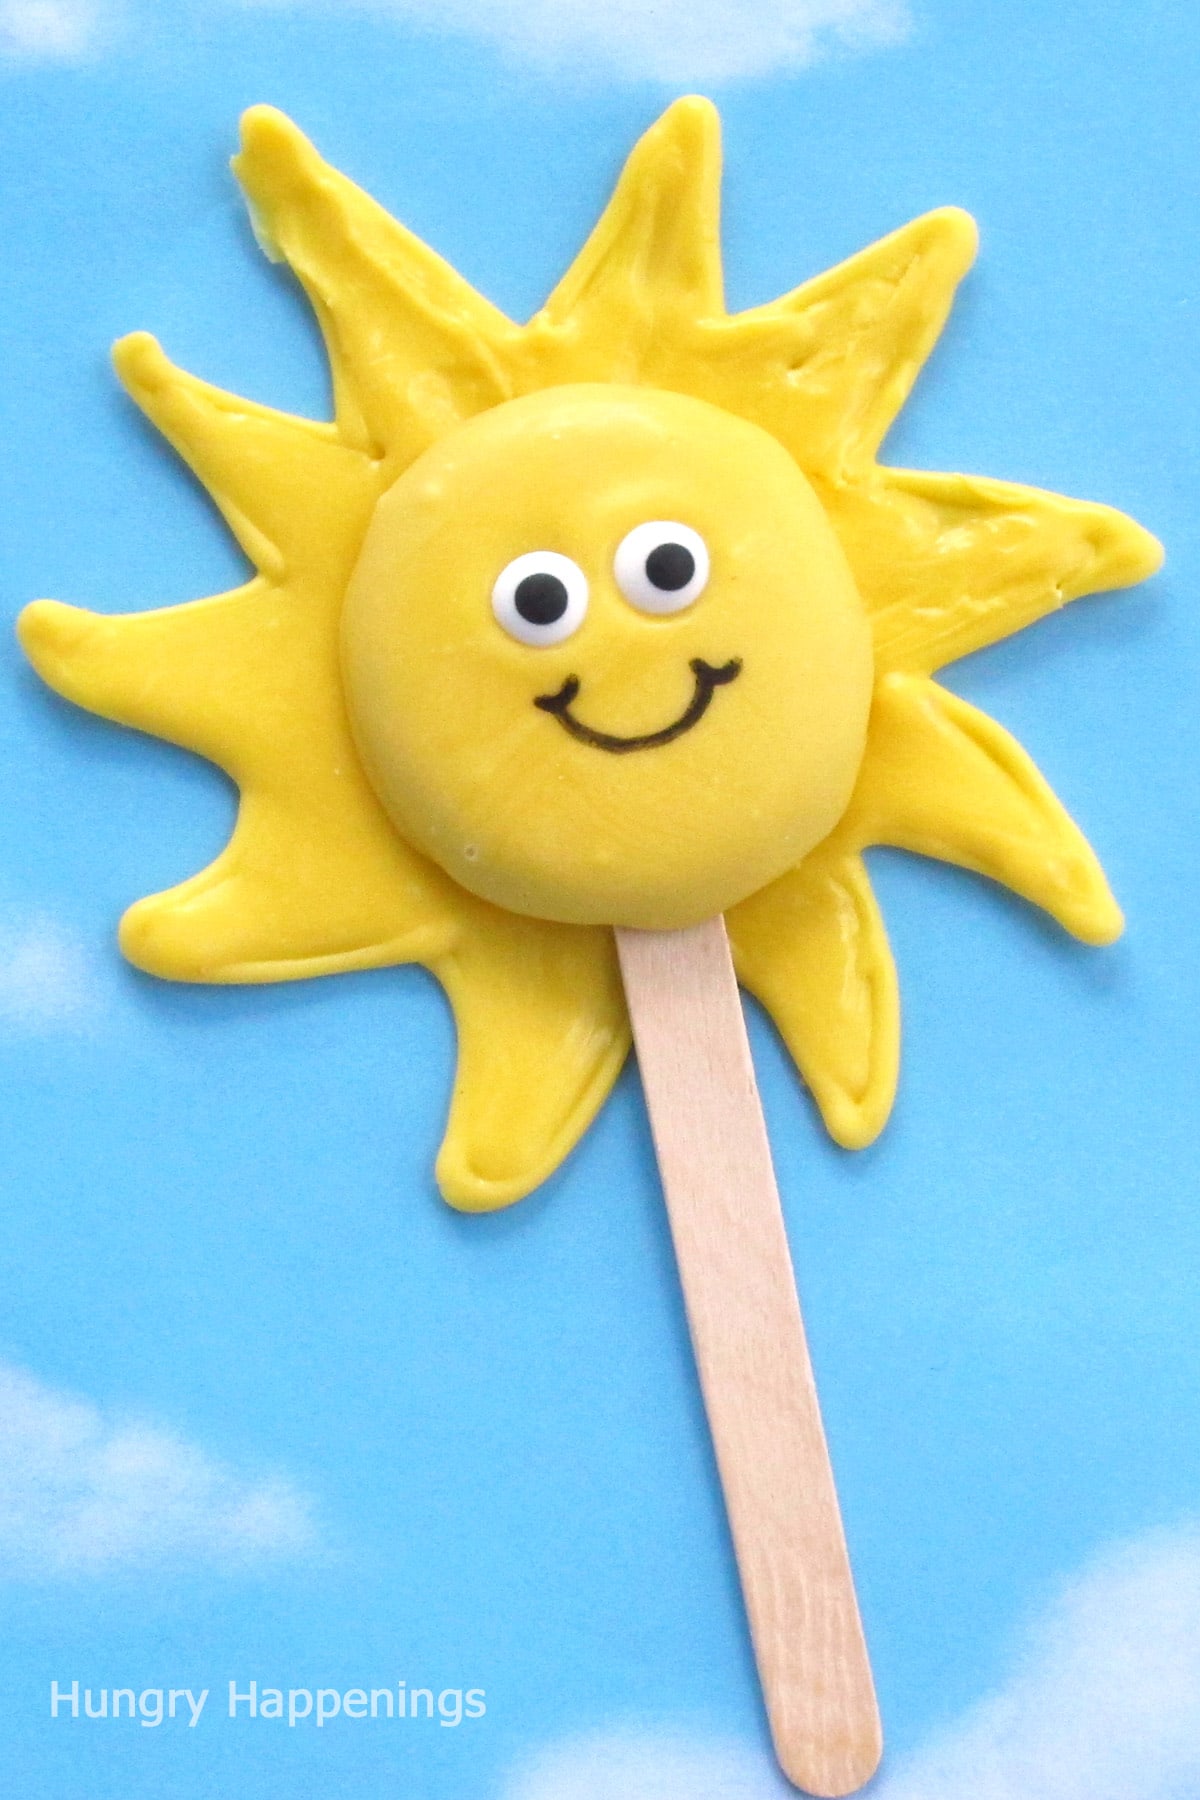 one smiley face sunshine lollipop.